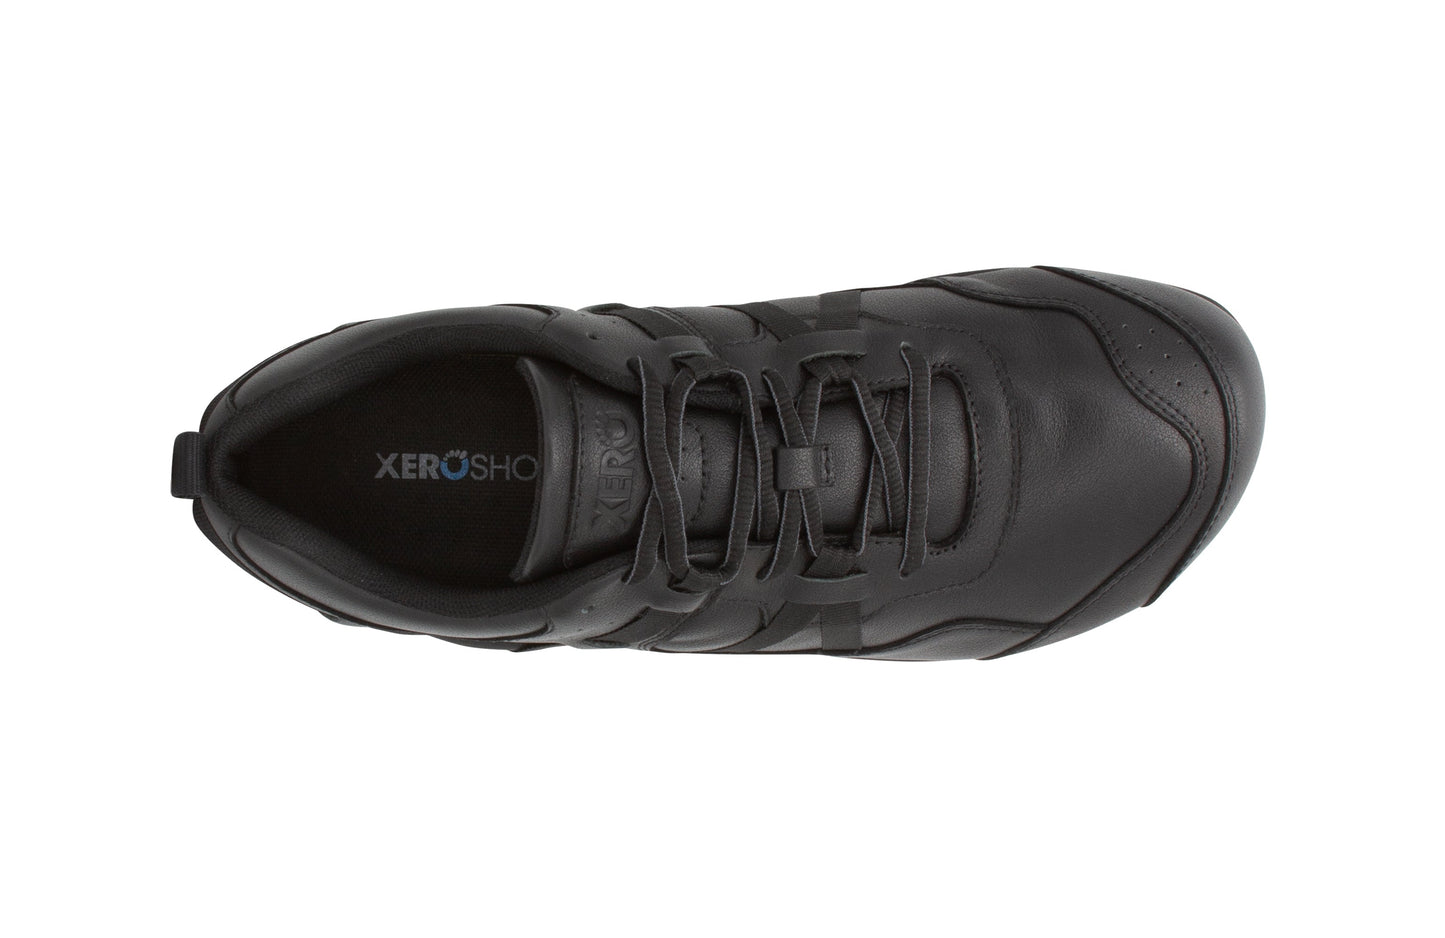 Xero Shoes Prio All-Day SR Womens barfods arbejdssko til kvinder i farven black, top